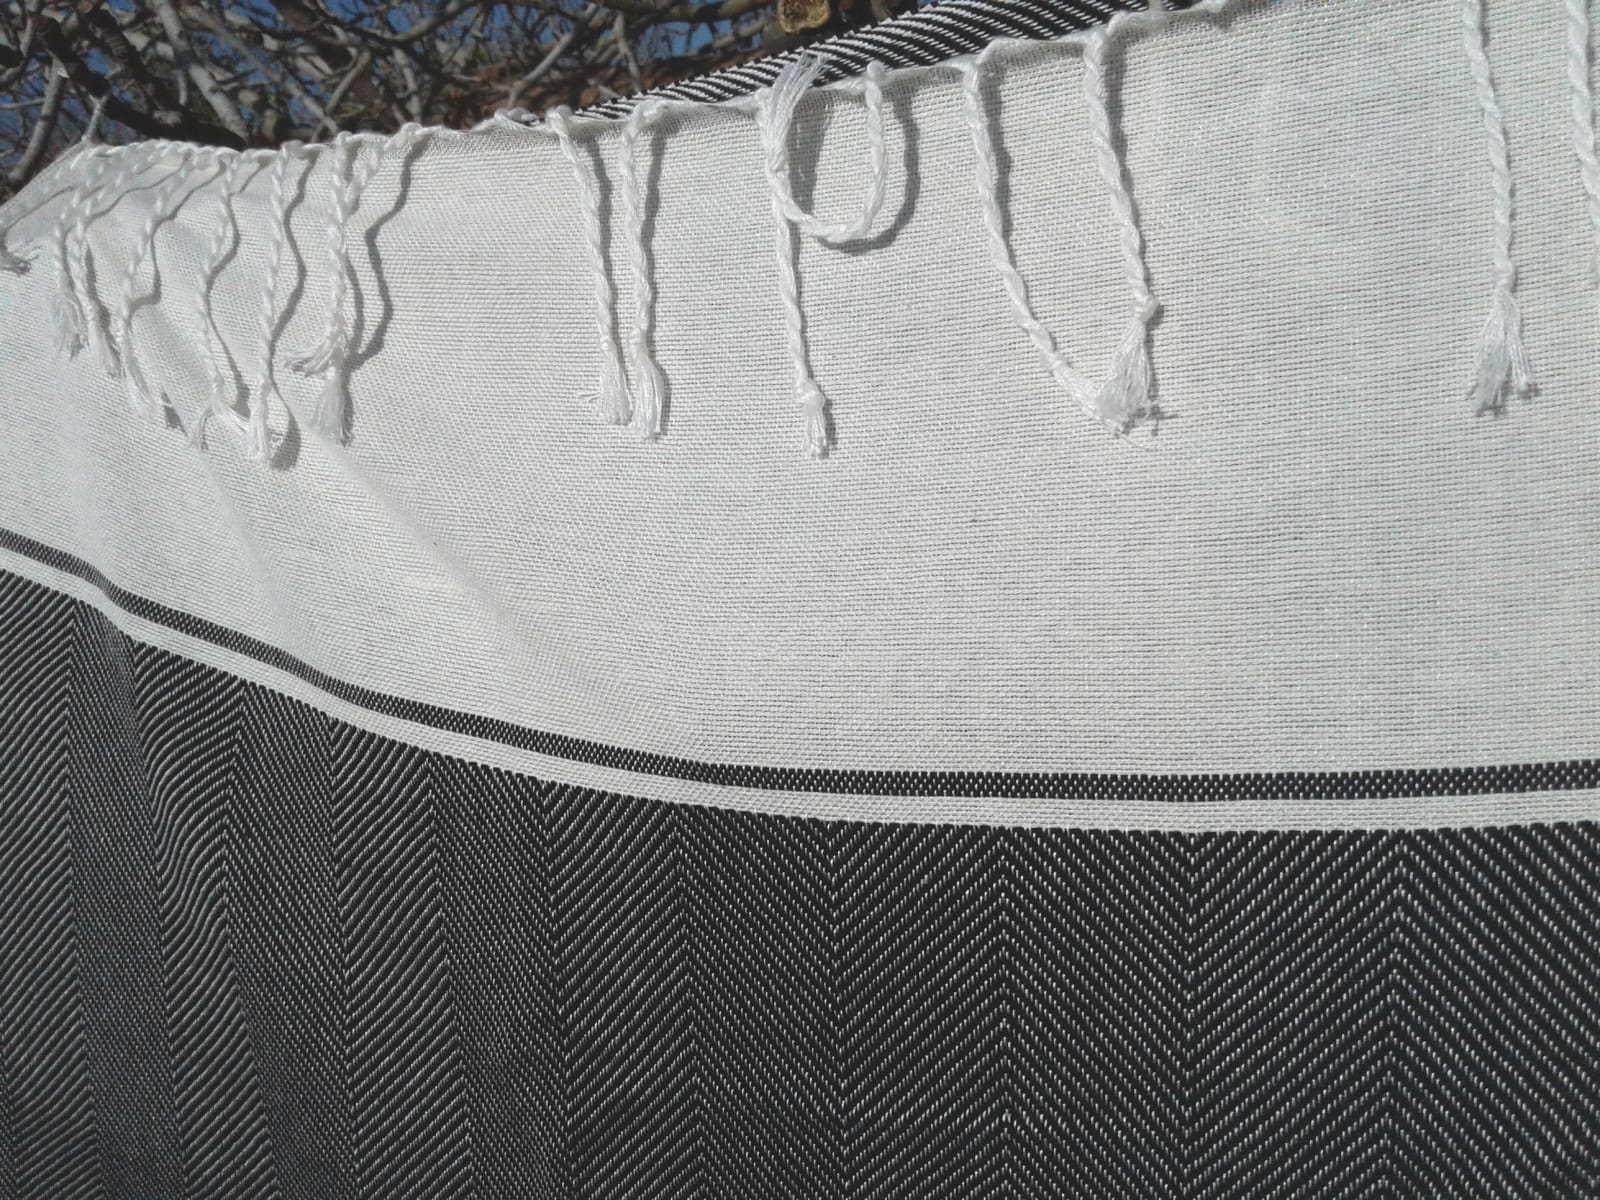  Towel Cotton Thread Black, White Morocco